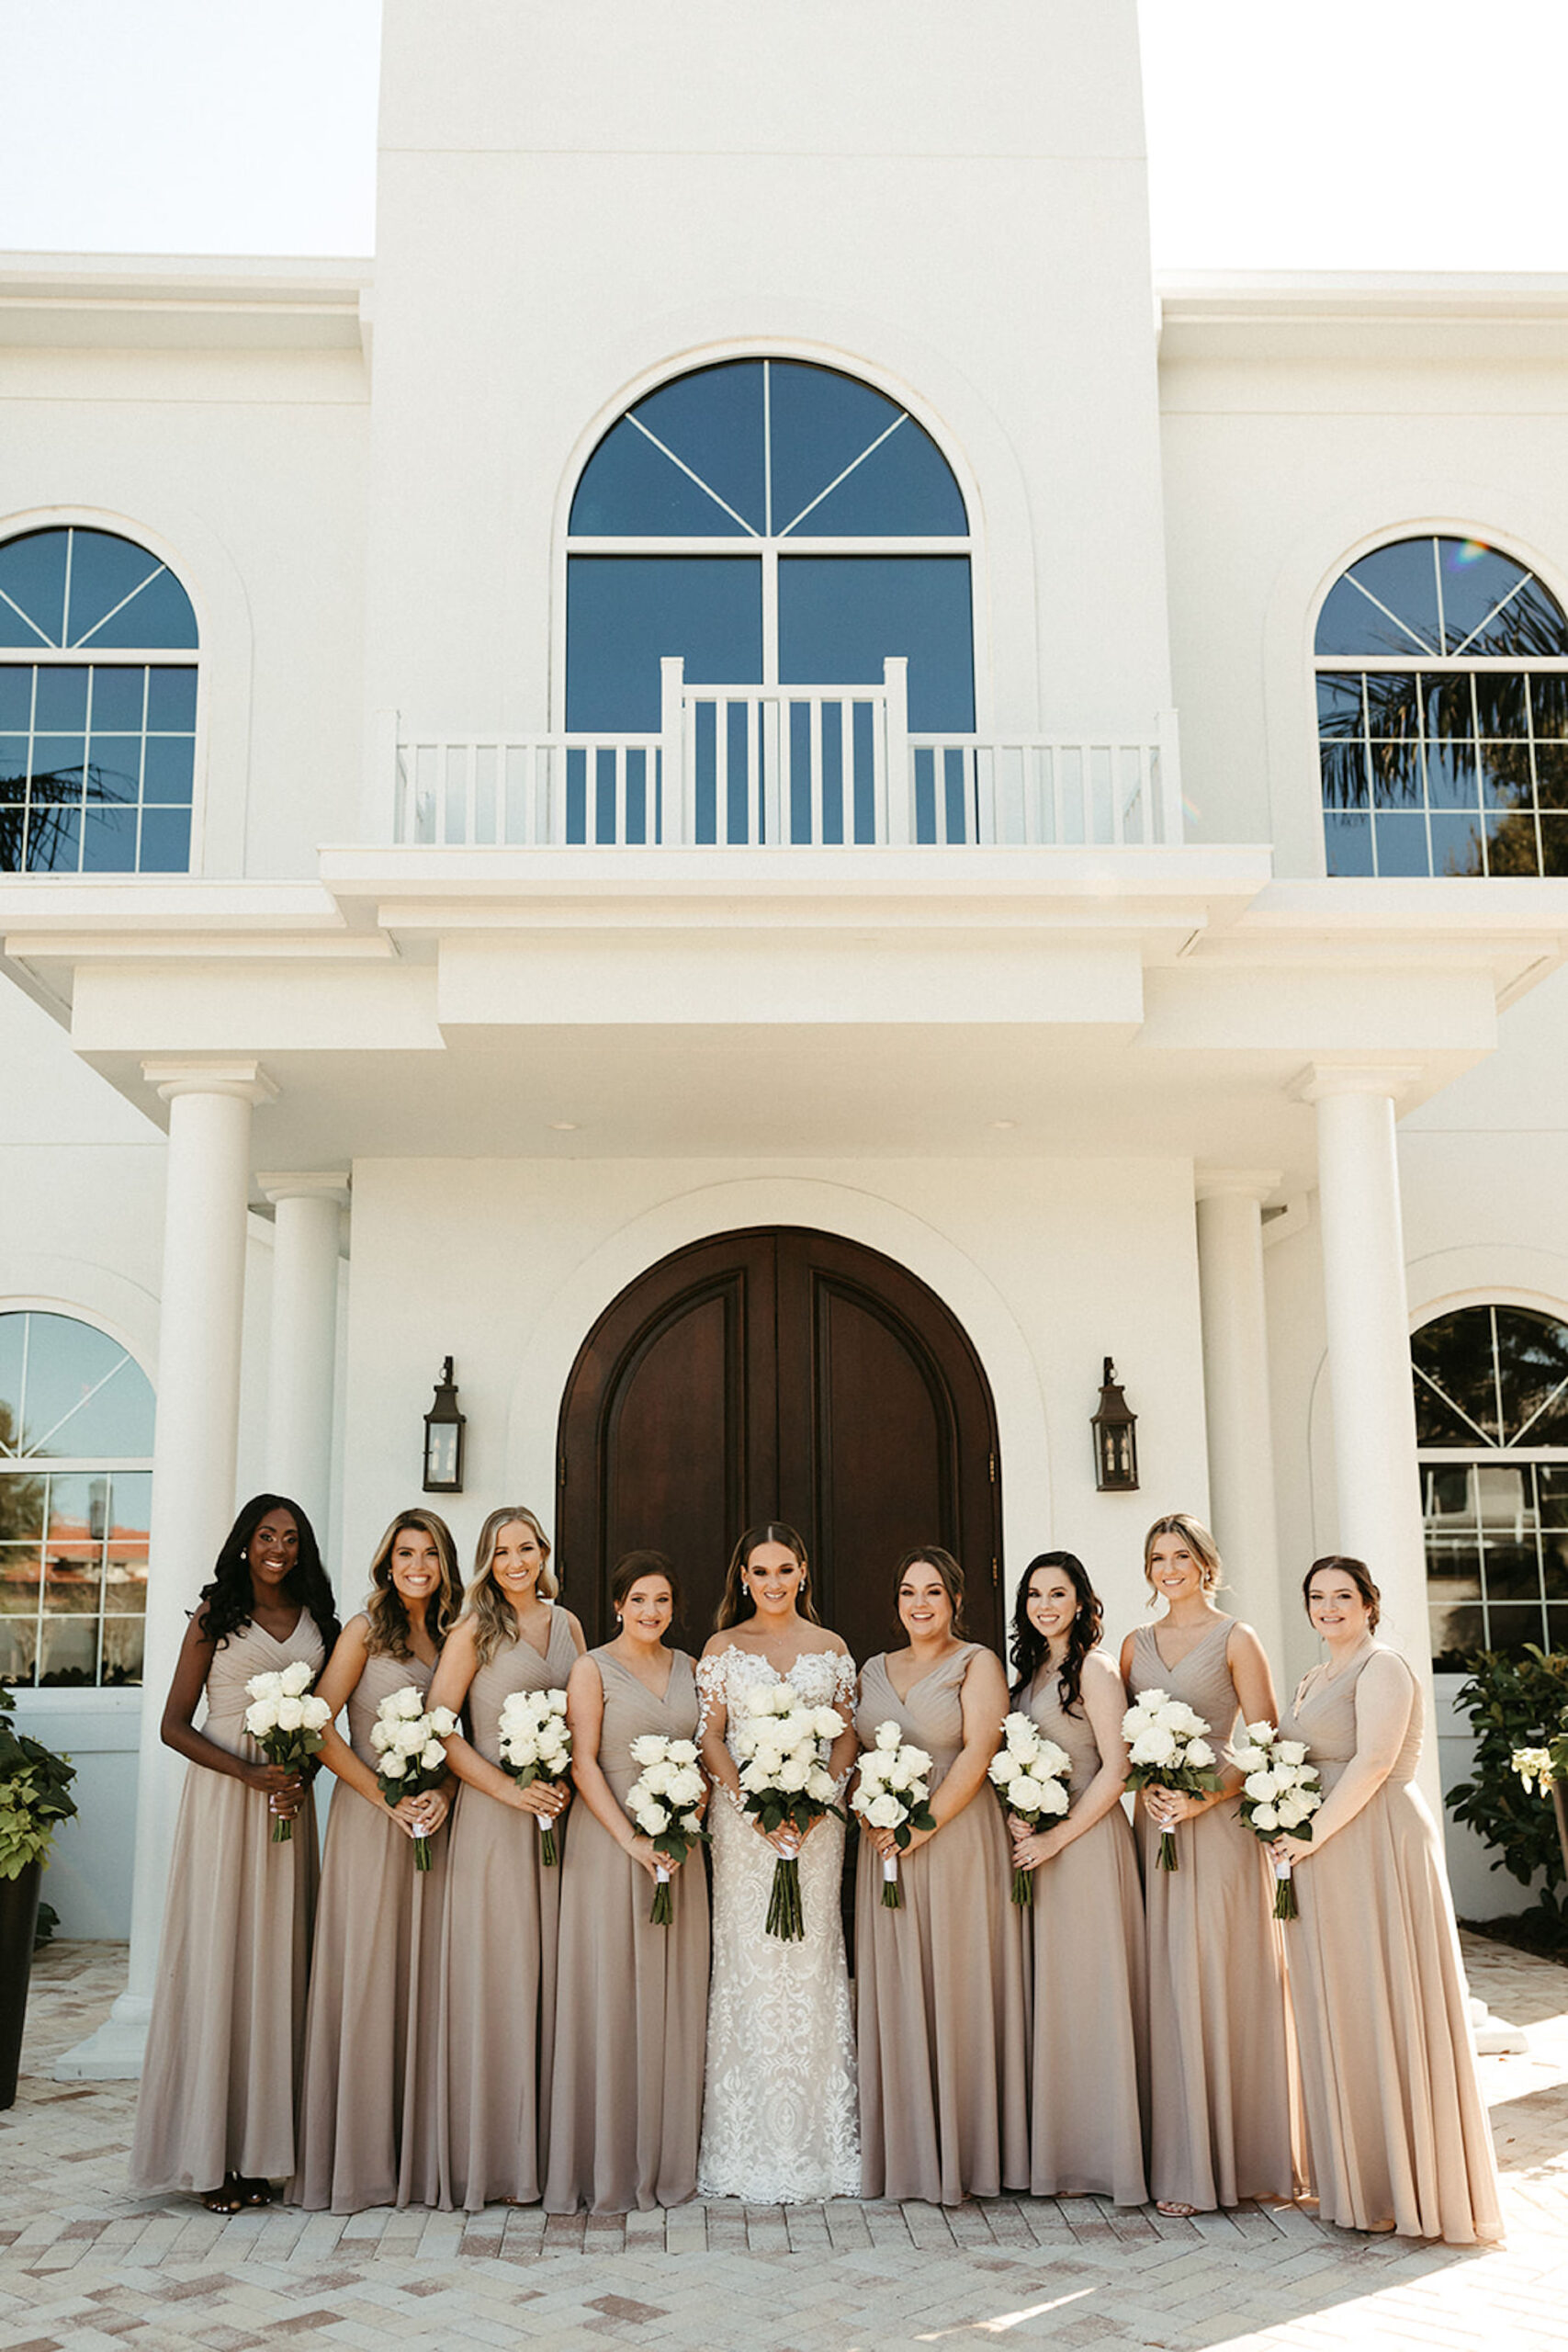 Bride with Bridesmaids in Taupe Floor Length Bridesmaids Dresses | Harborside Chapel in St. Petersburg Florida Wedding Ceremony